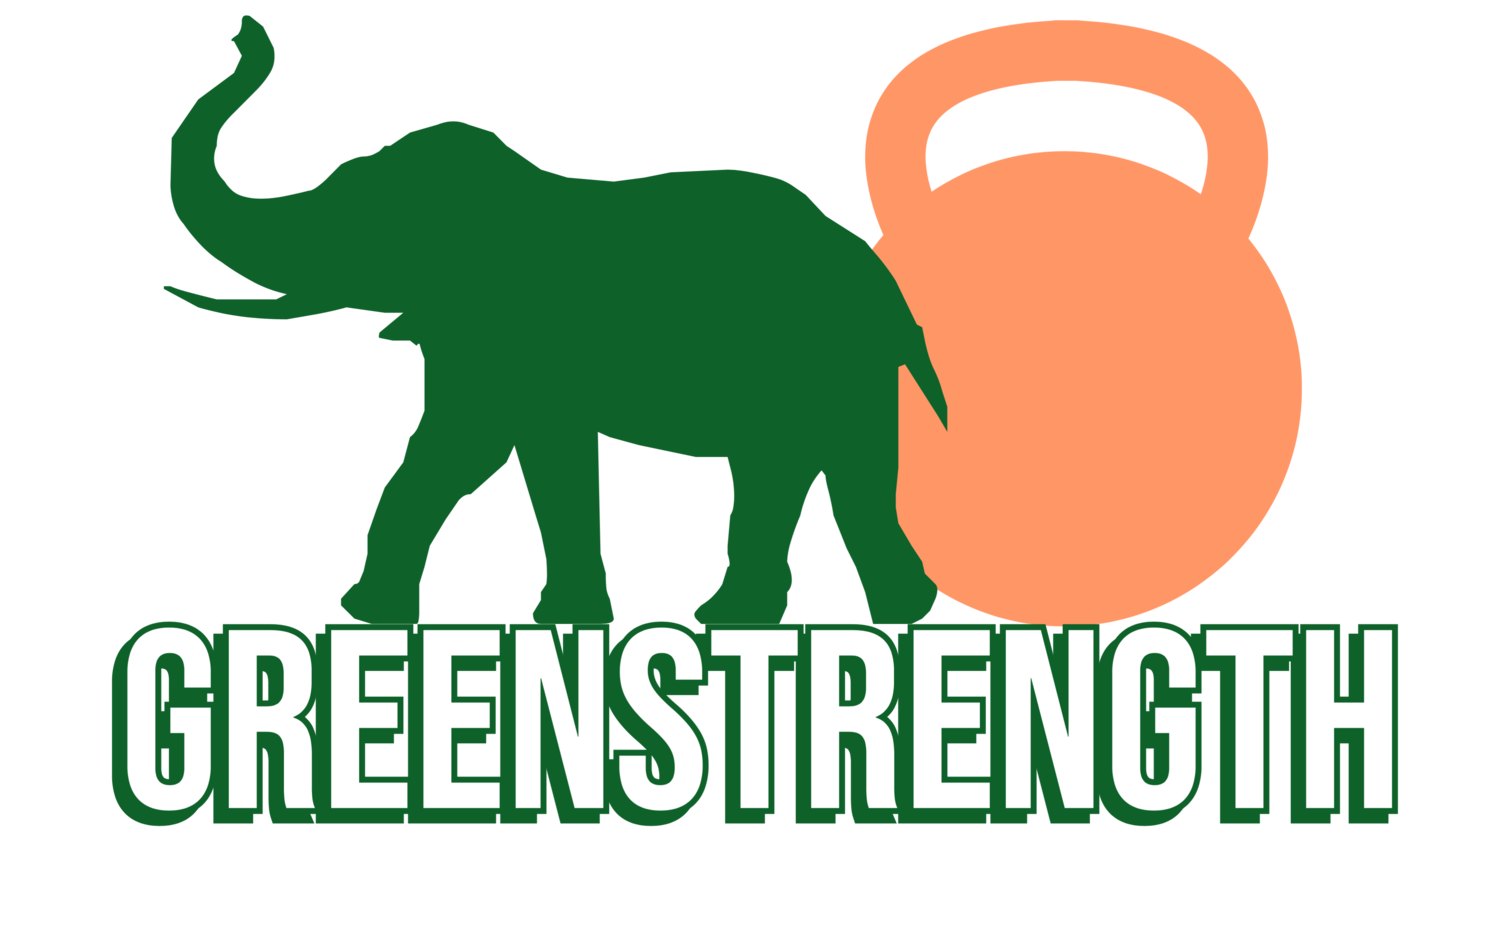 www.greenstrengthhq.com